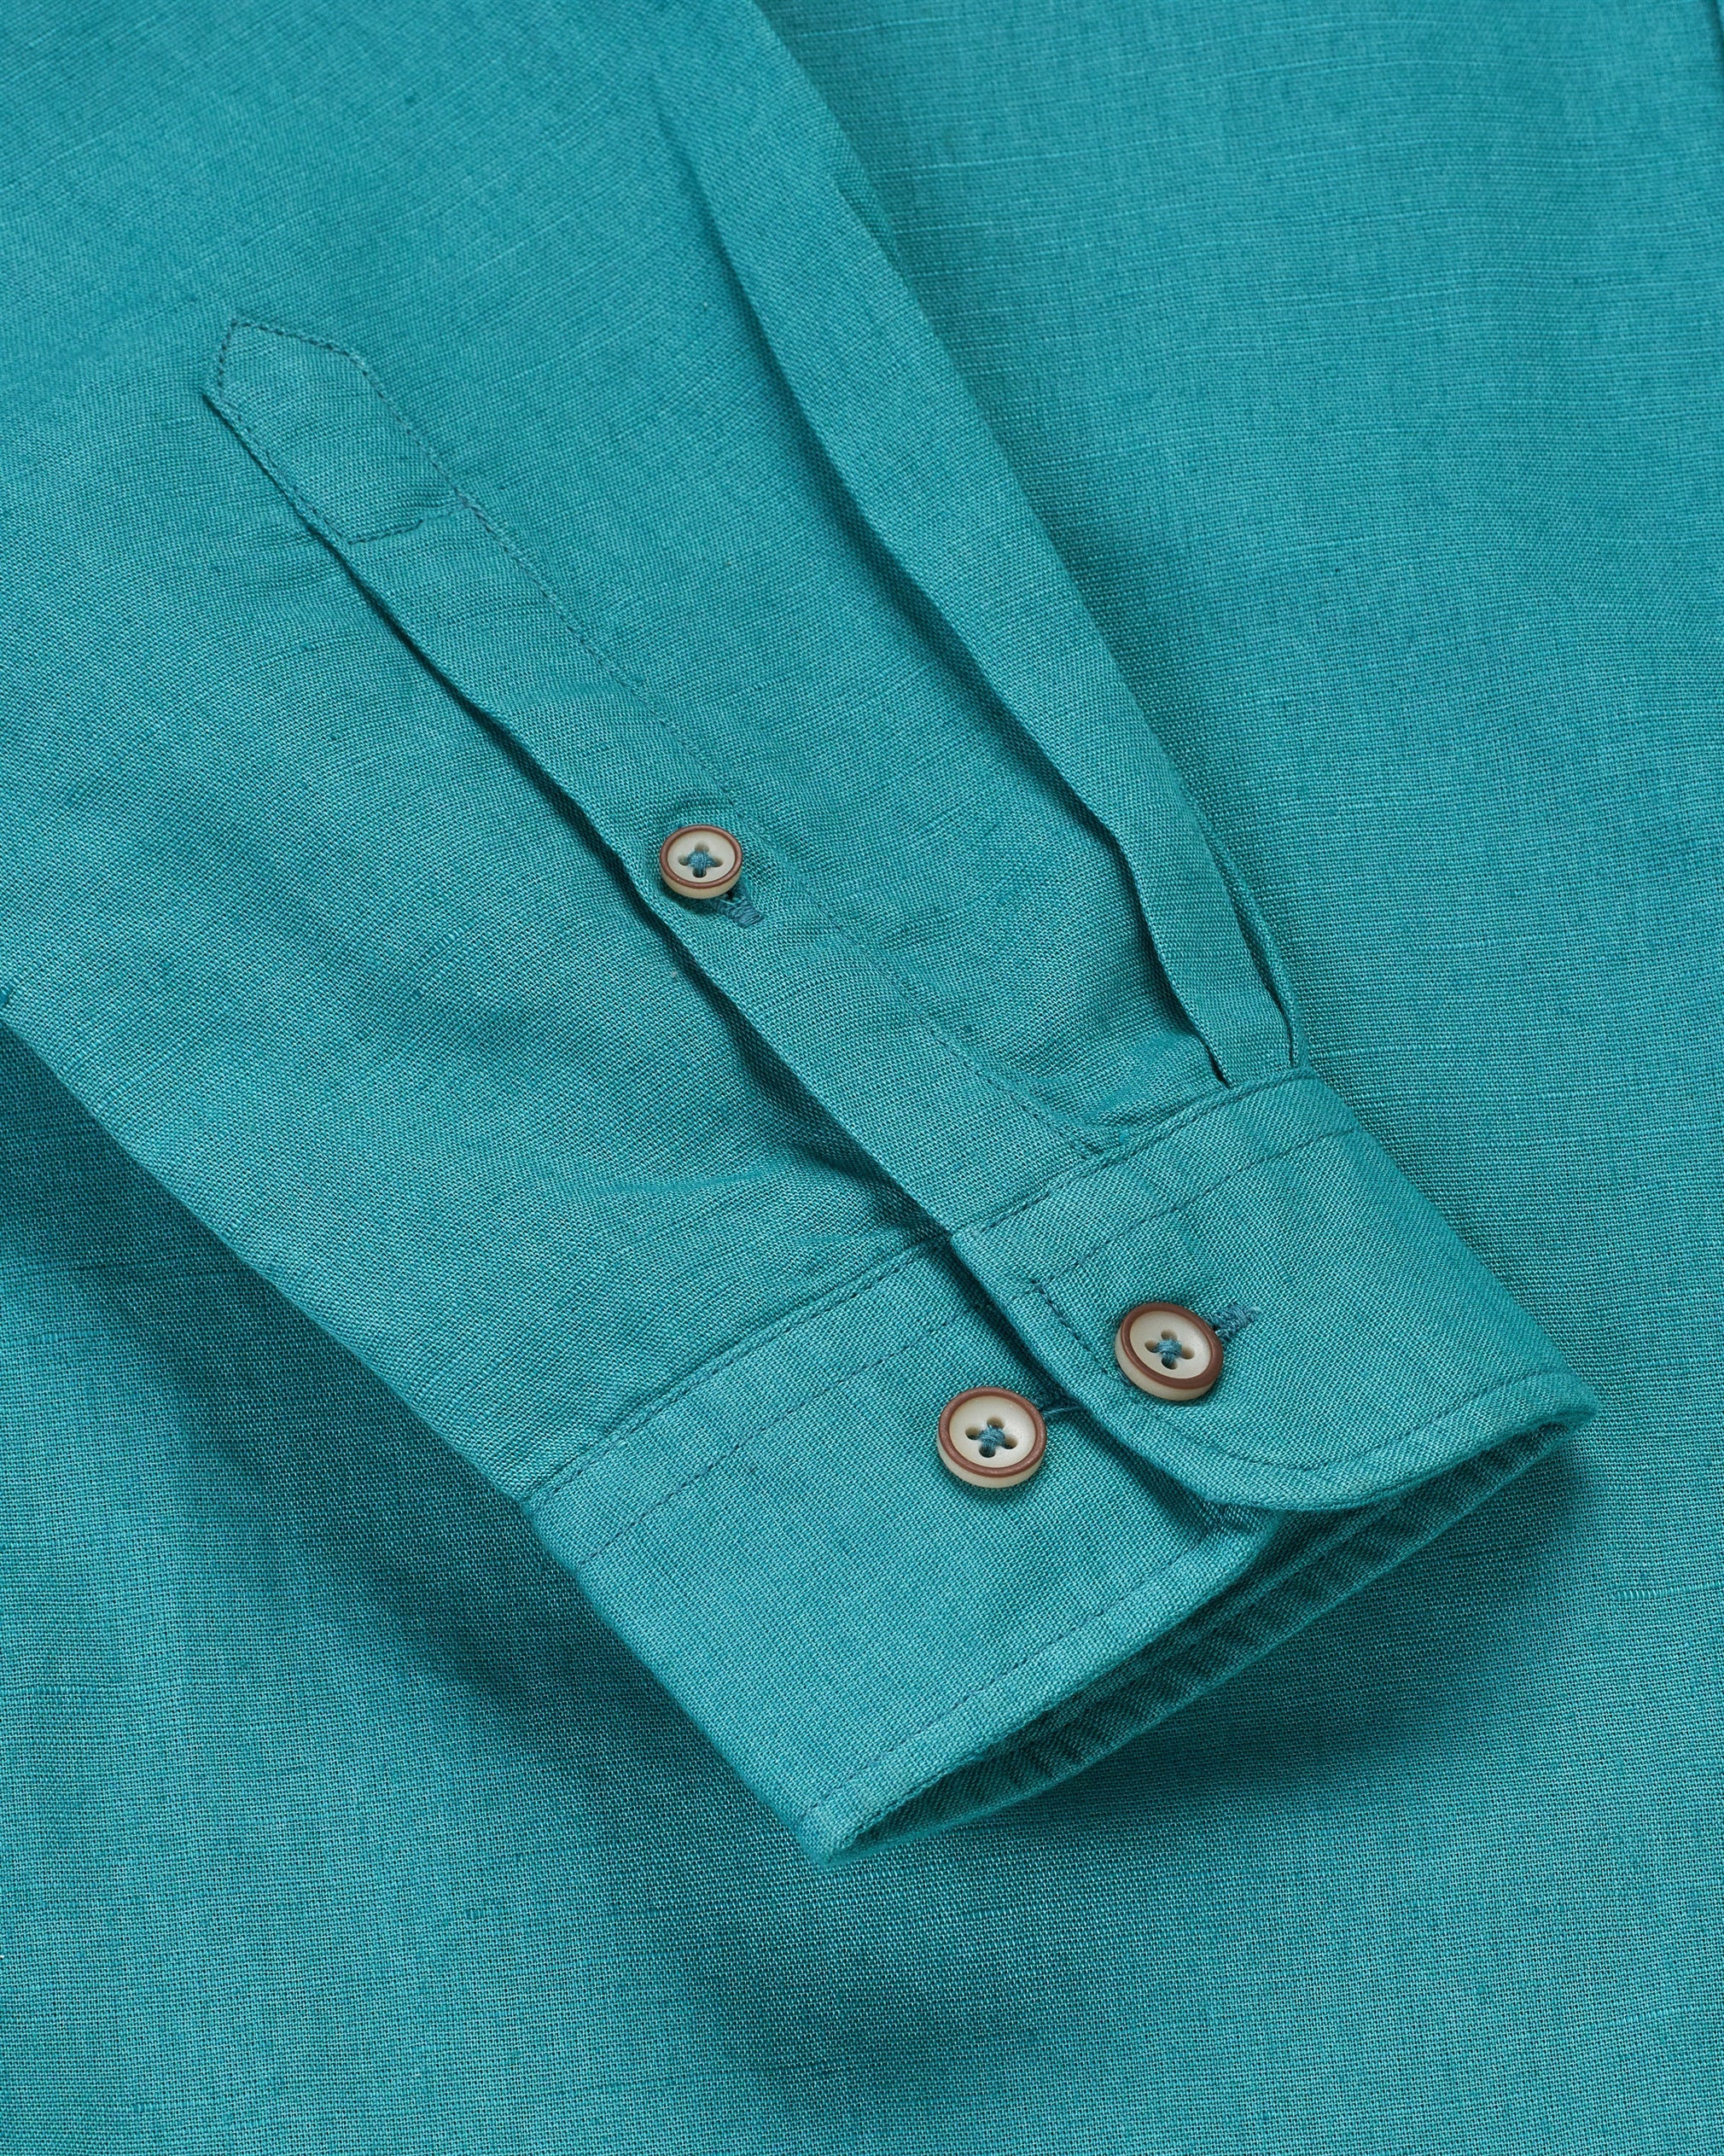 Bare Brown Mandarin Collar Cotton Linen Shirt, Slim Fit with Full Sleeves - Aqua